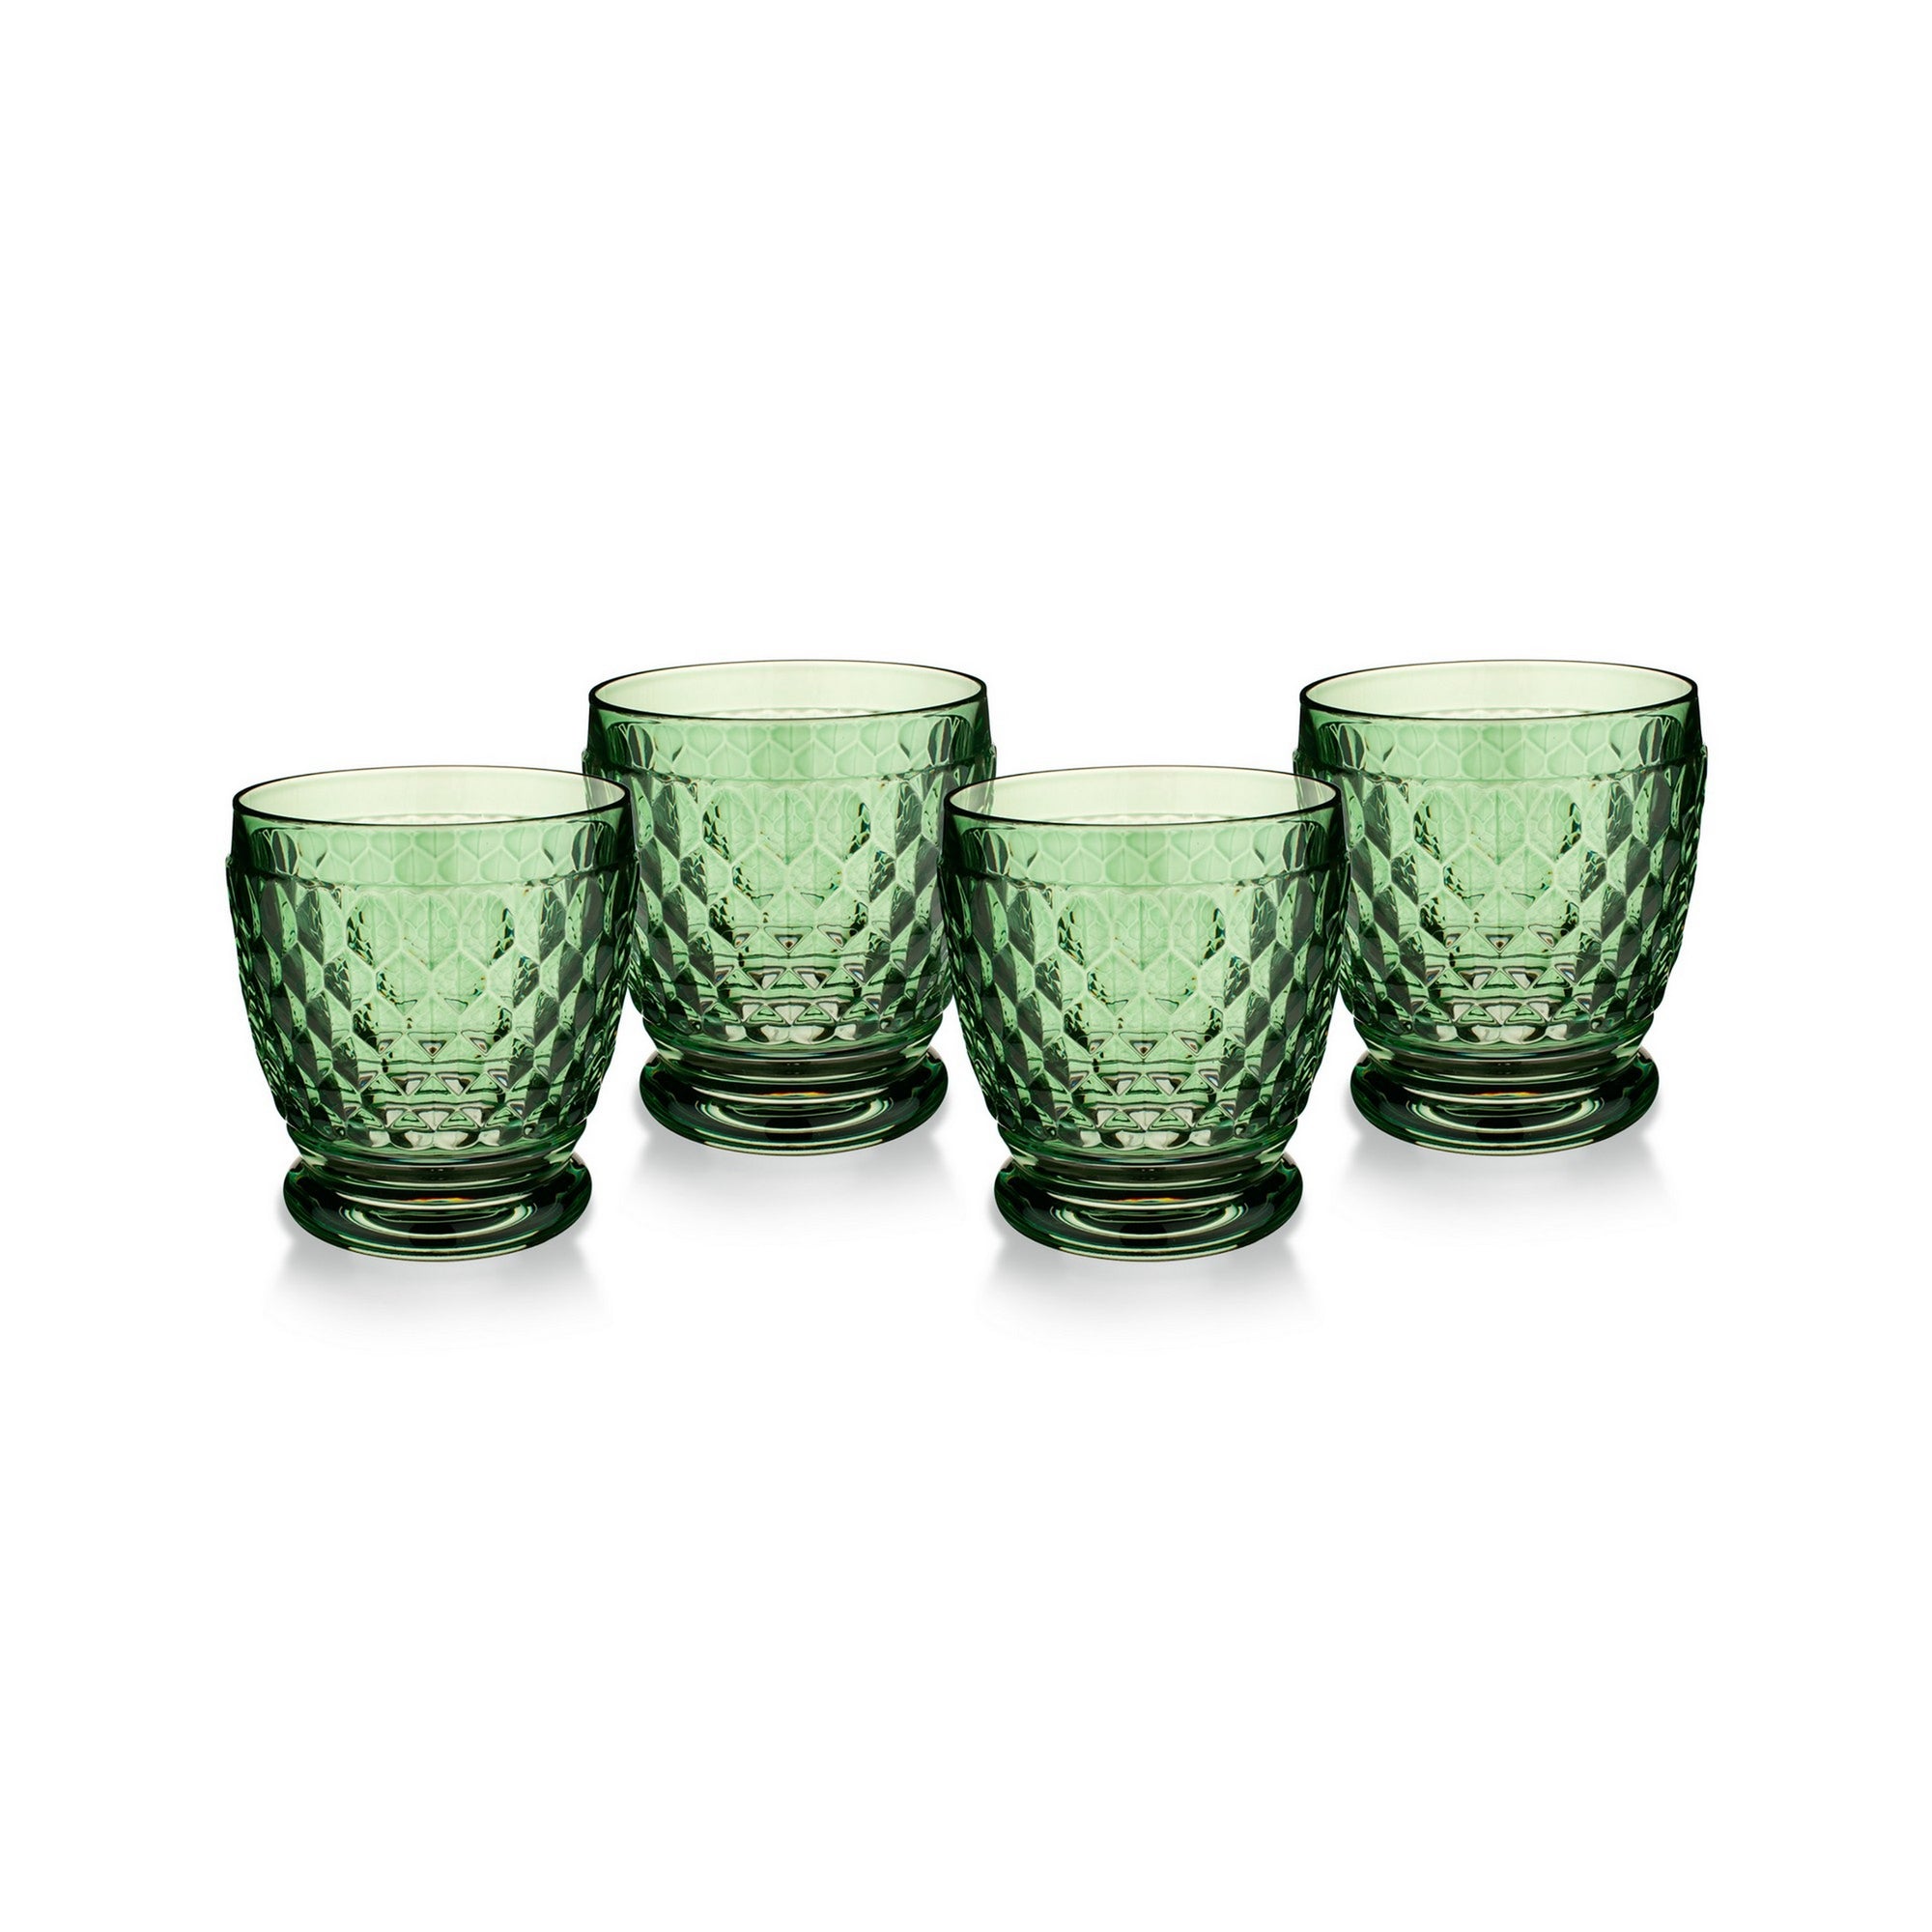 Villeroy & Boch Boston Colored Shot Glasses, Set of 4,  Green, 2.75 oz